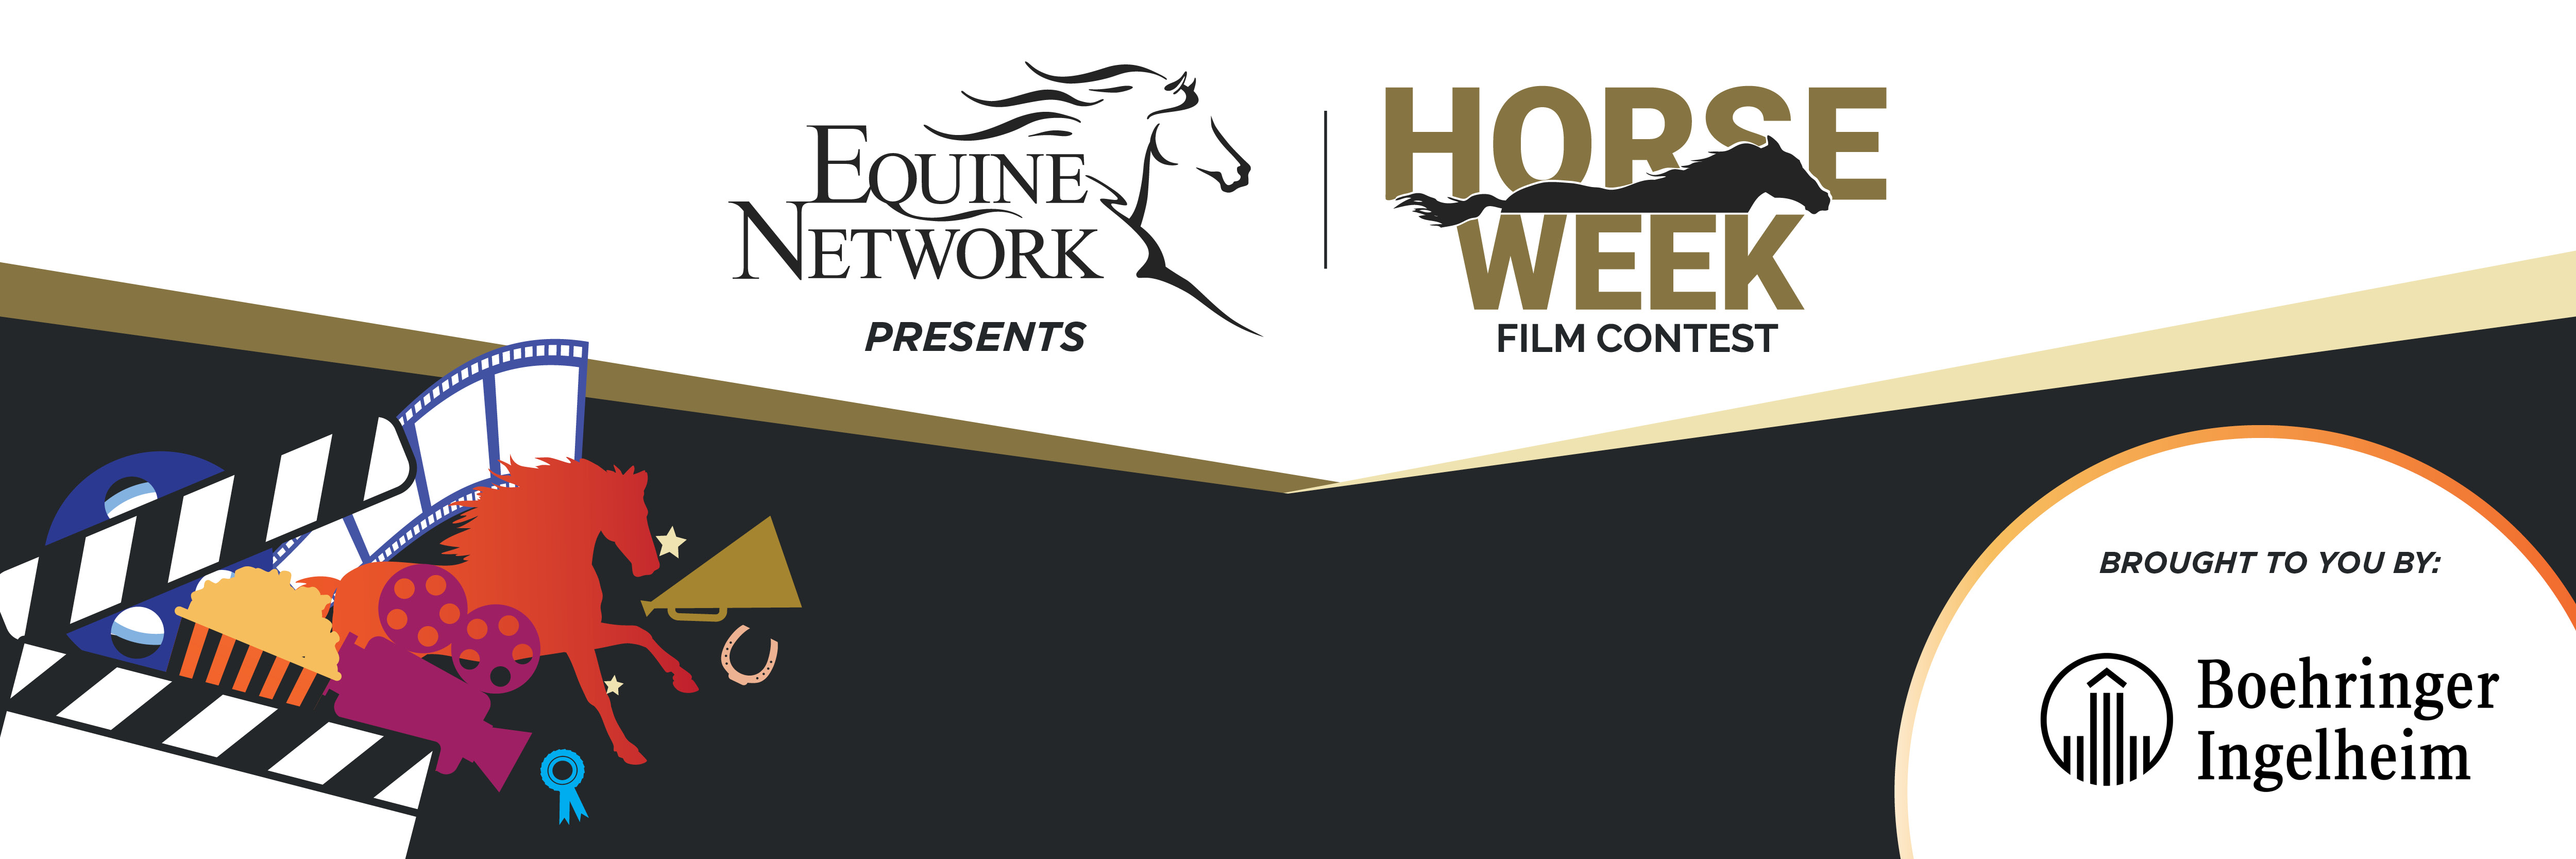 Horse Week Film Contest